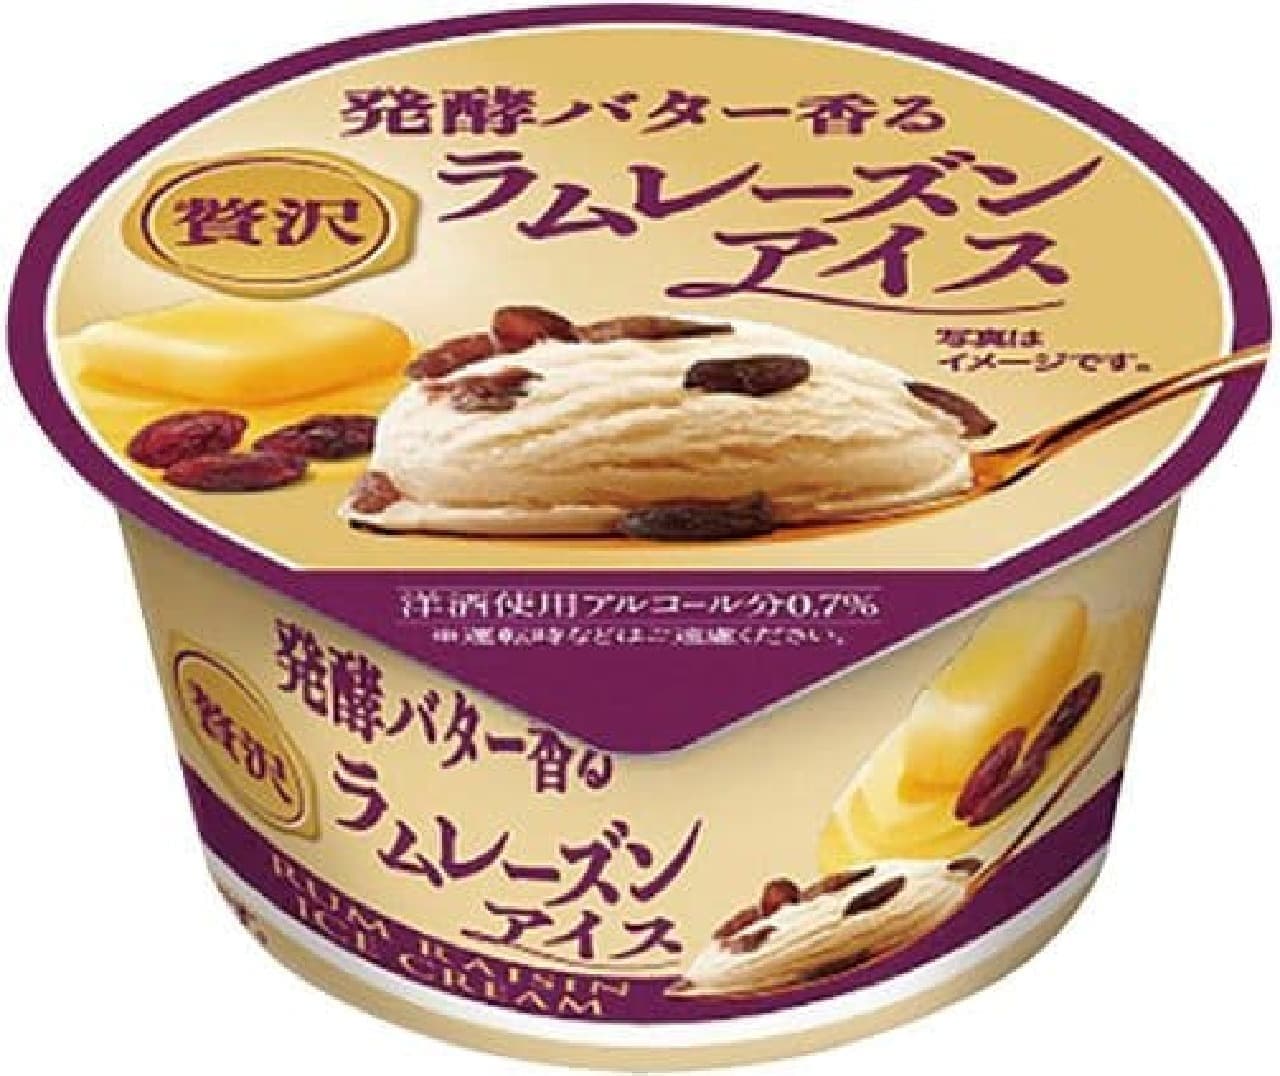 FamilyMart "Mateo - Fermented Butter Scented Luxurious Rum Raisin Ice Cream" (Japanese only)